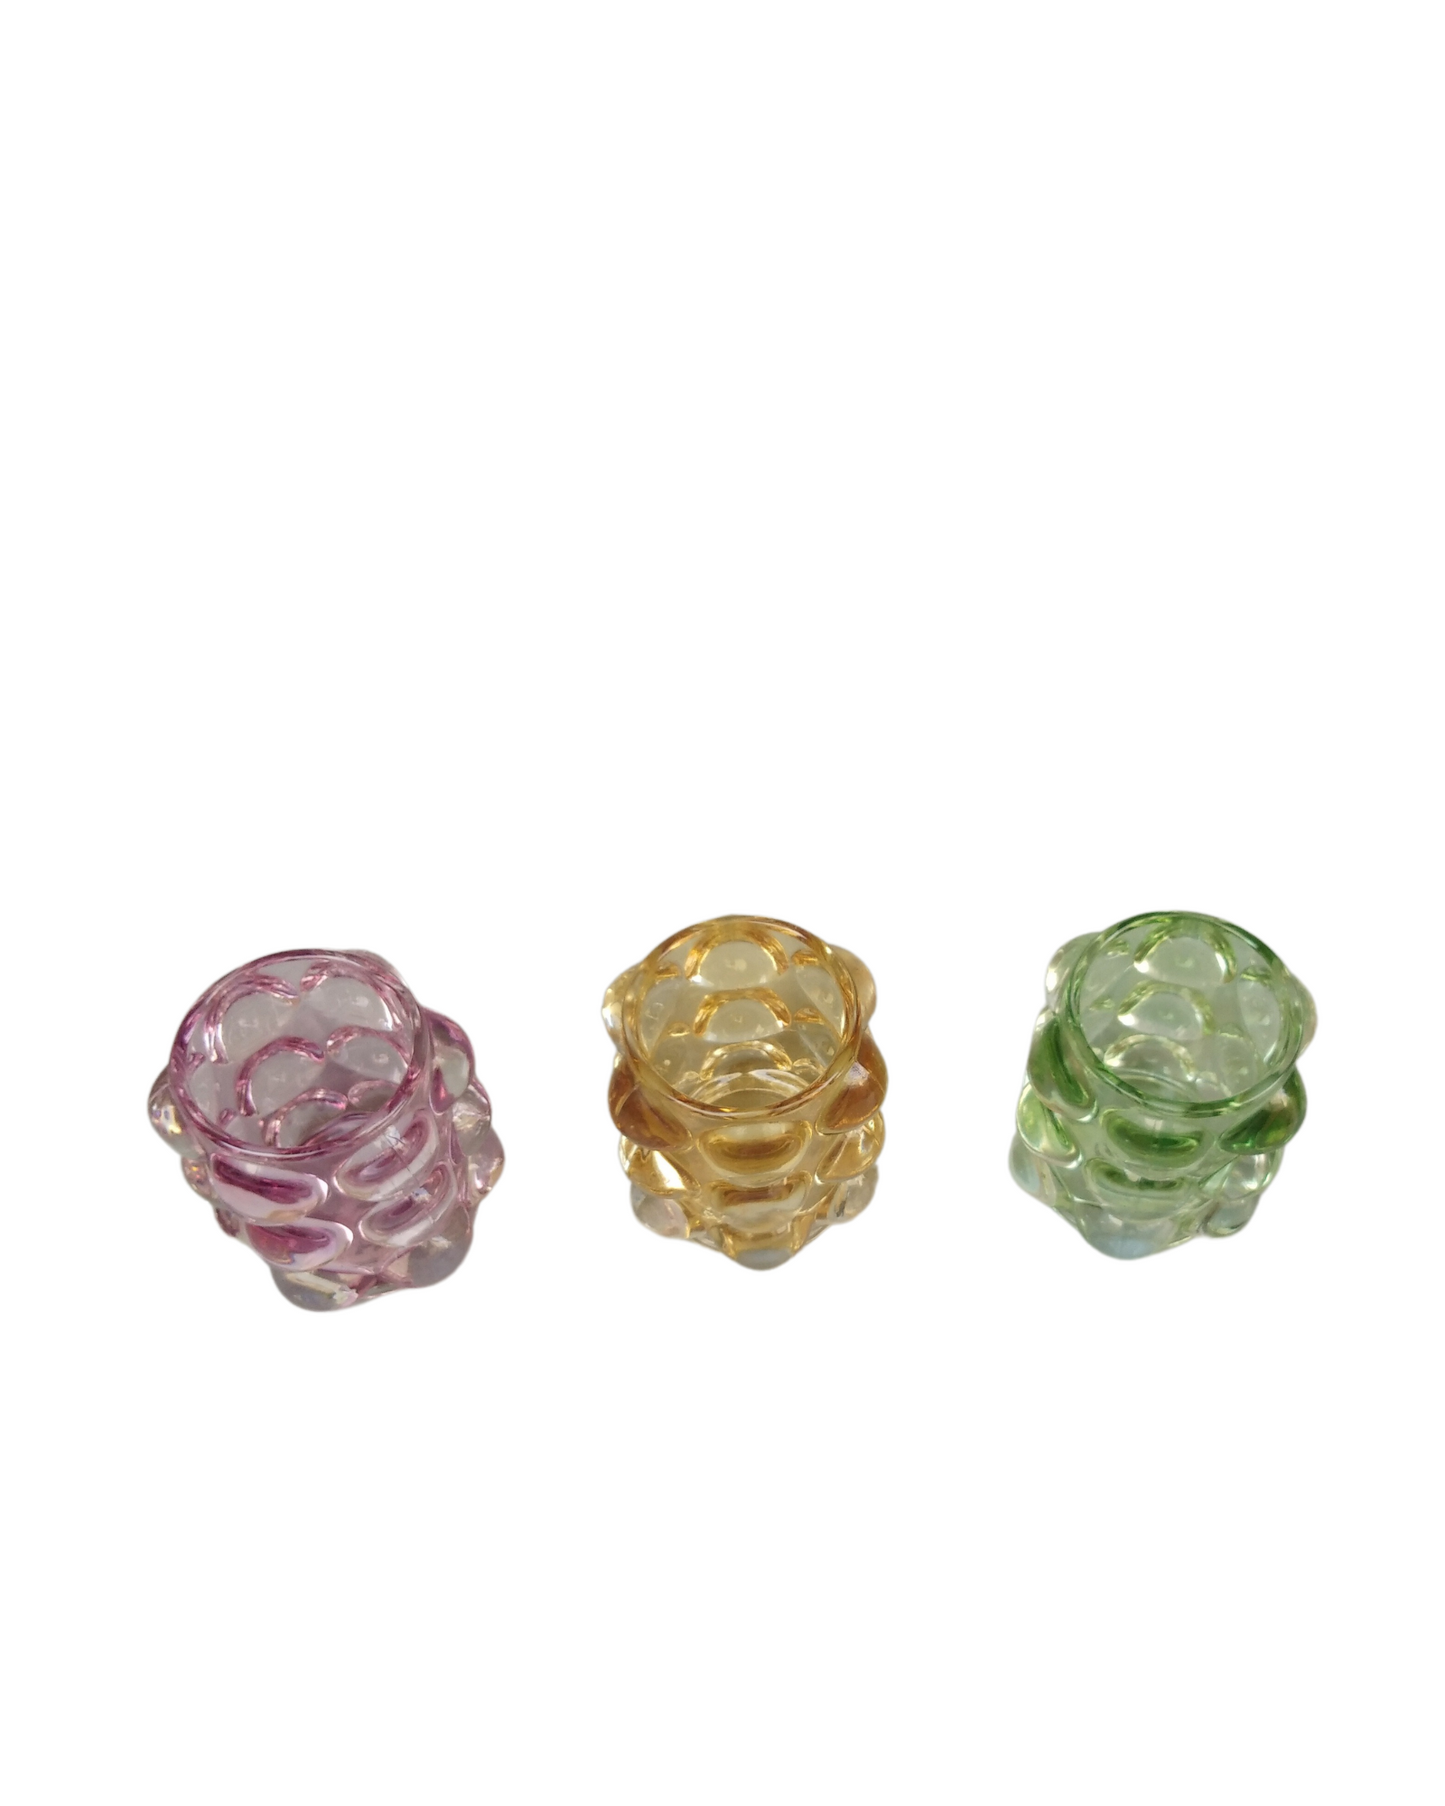 Pen Jar/Multifunction Crystal Jar - Available In 3 Color